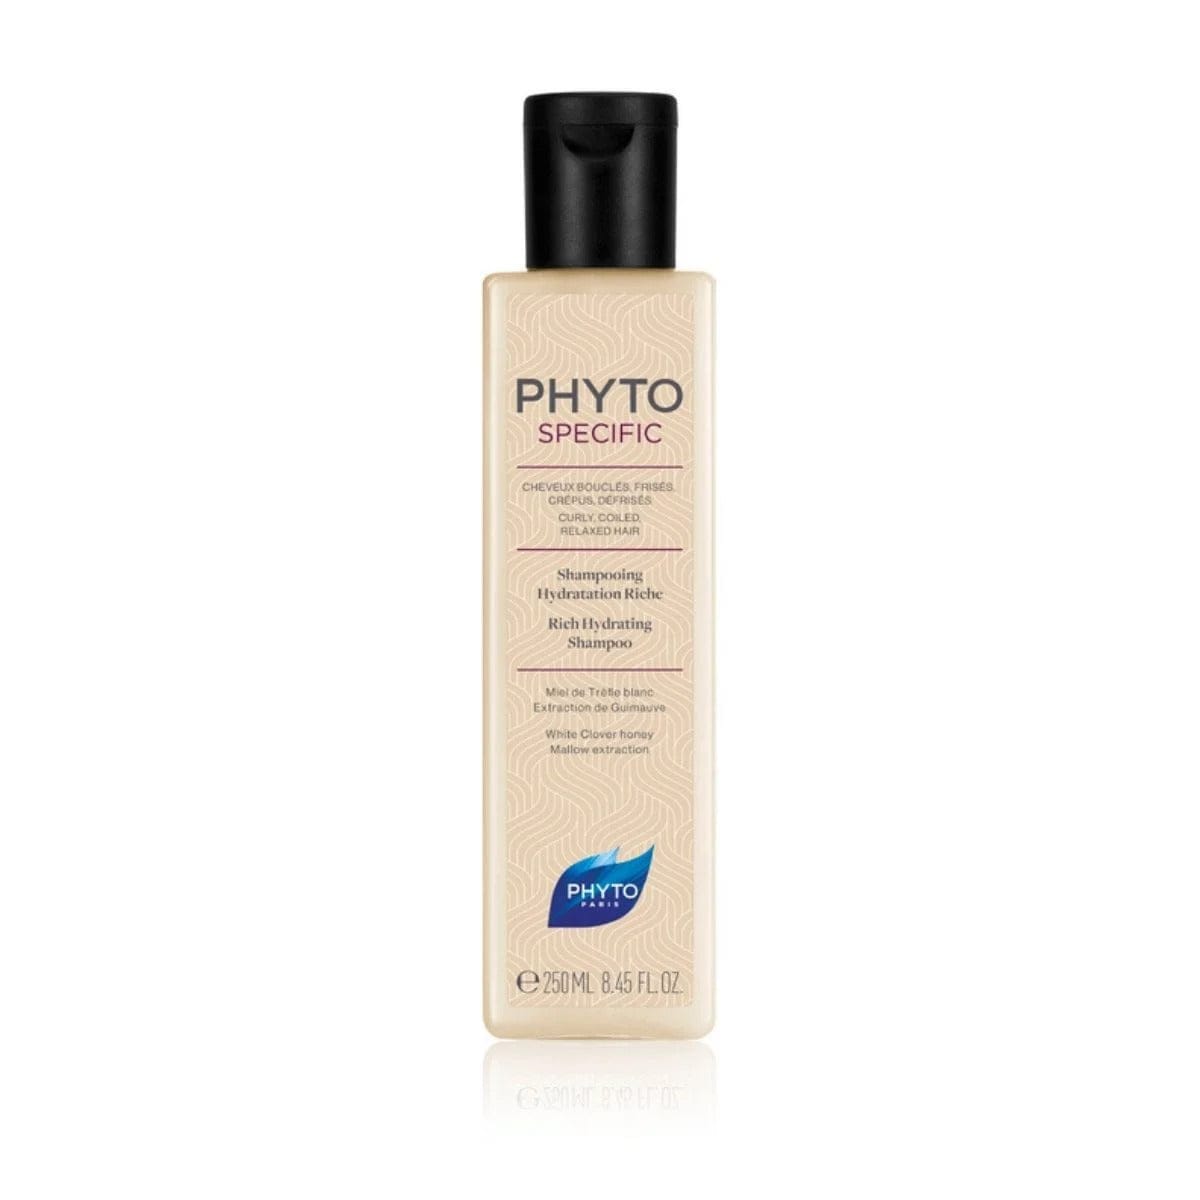 PHYTO Soins & Beauté Phytospecific (shampoing hydratation) 250ml